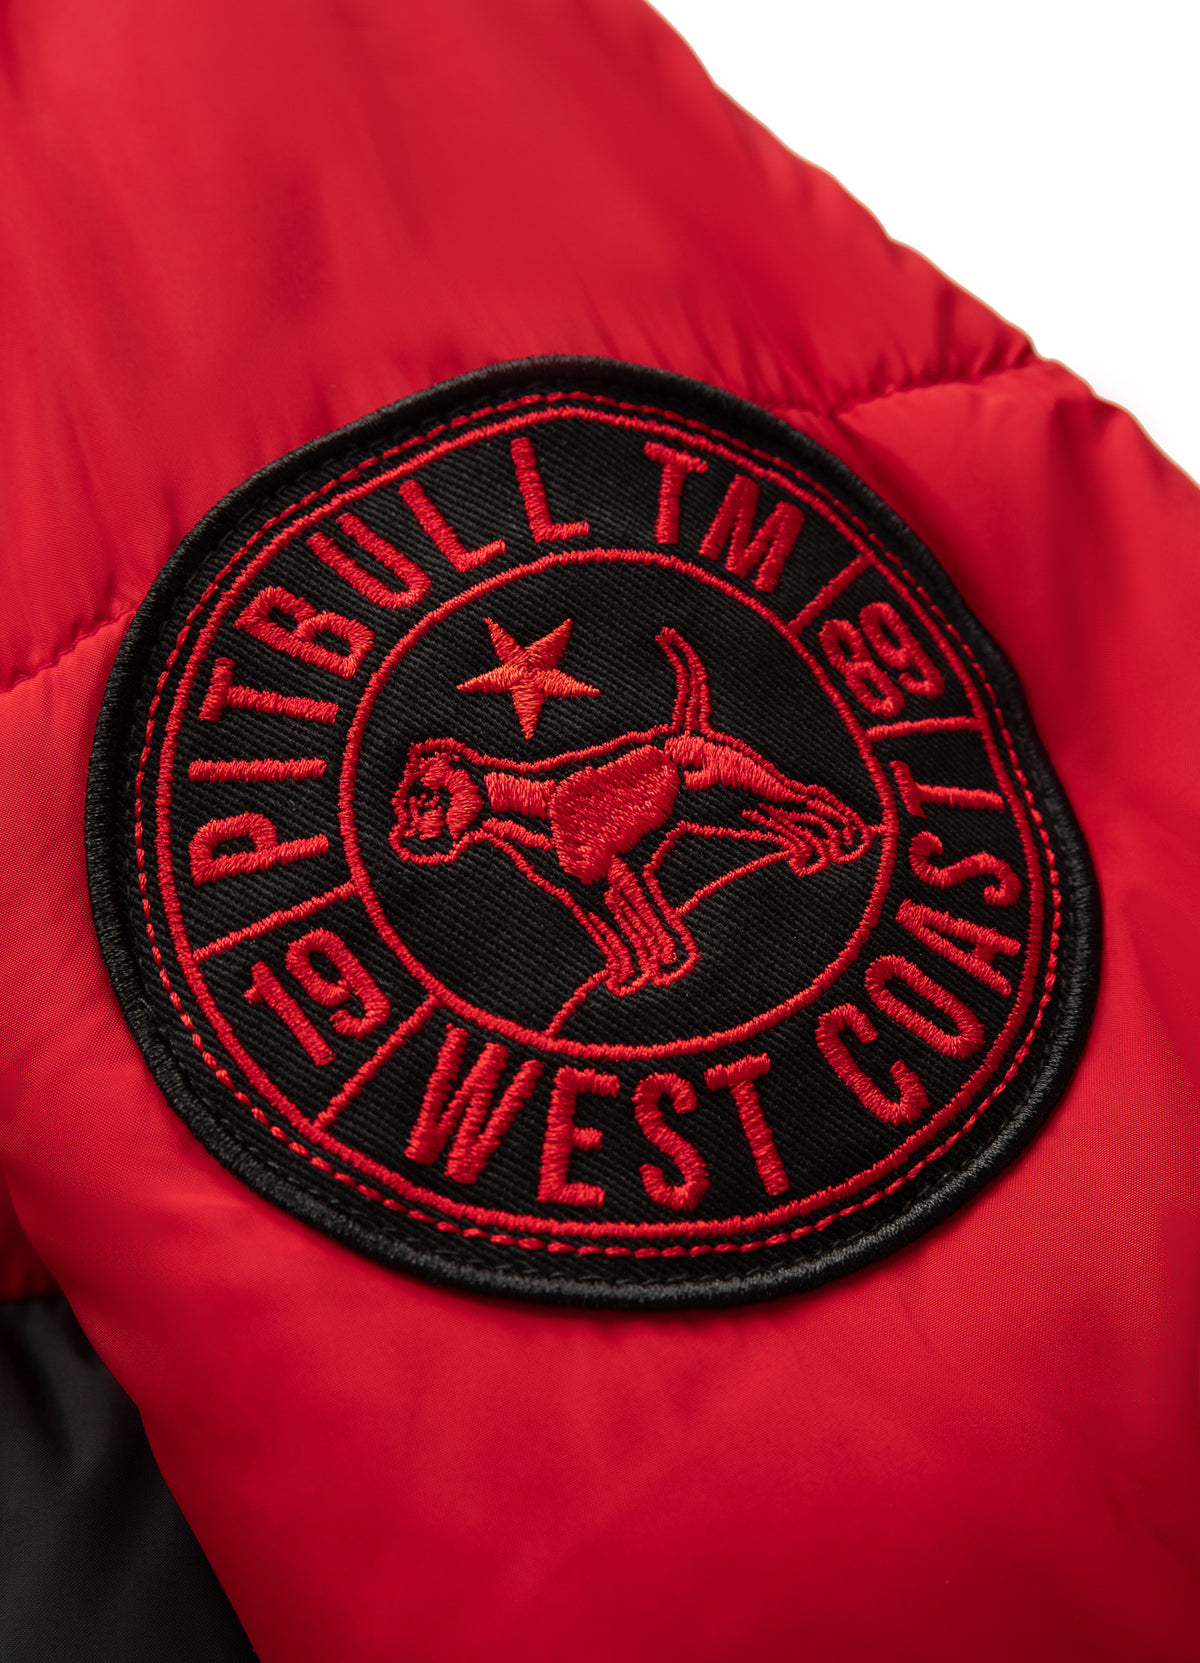 Men's Jacket Mobley Red/Black - Pitbull West Coast International Store 